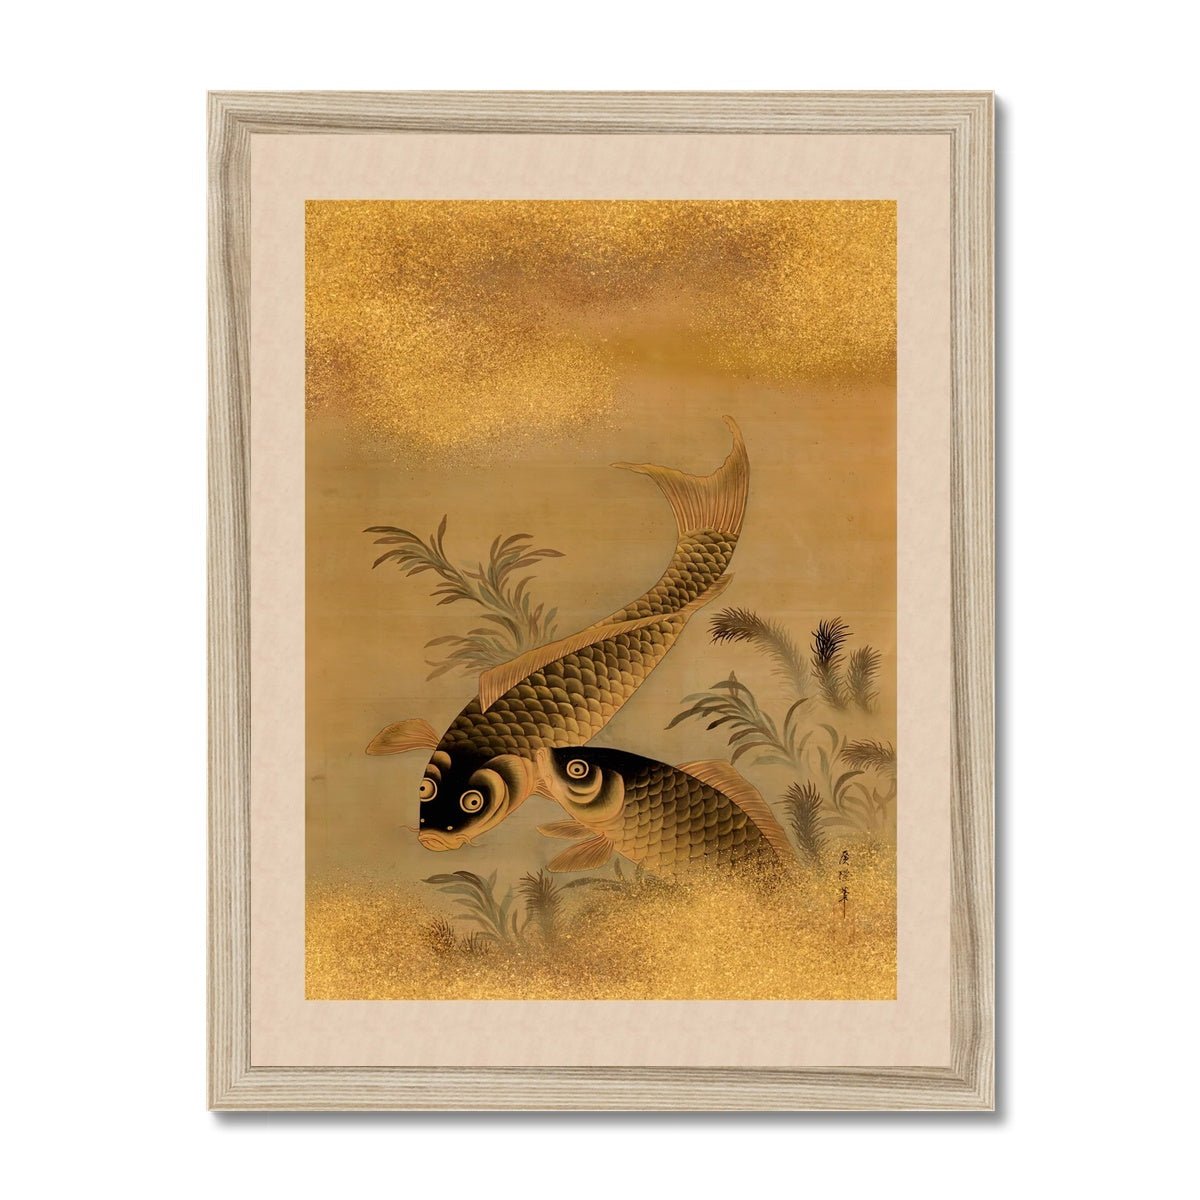 Fine art 6"x8" / Natural Frame Koi and Water Plants Antique Japanese 19th-Century Zen Scroll Gold Carp Marine Life Aquatic Nature Framed Fine Art Print